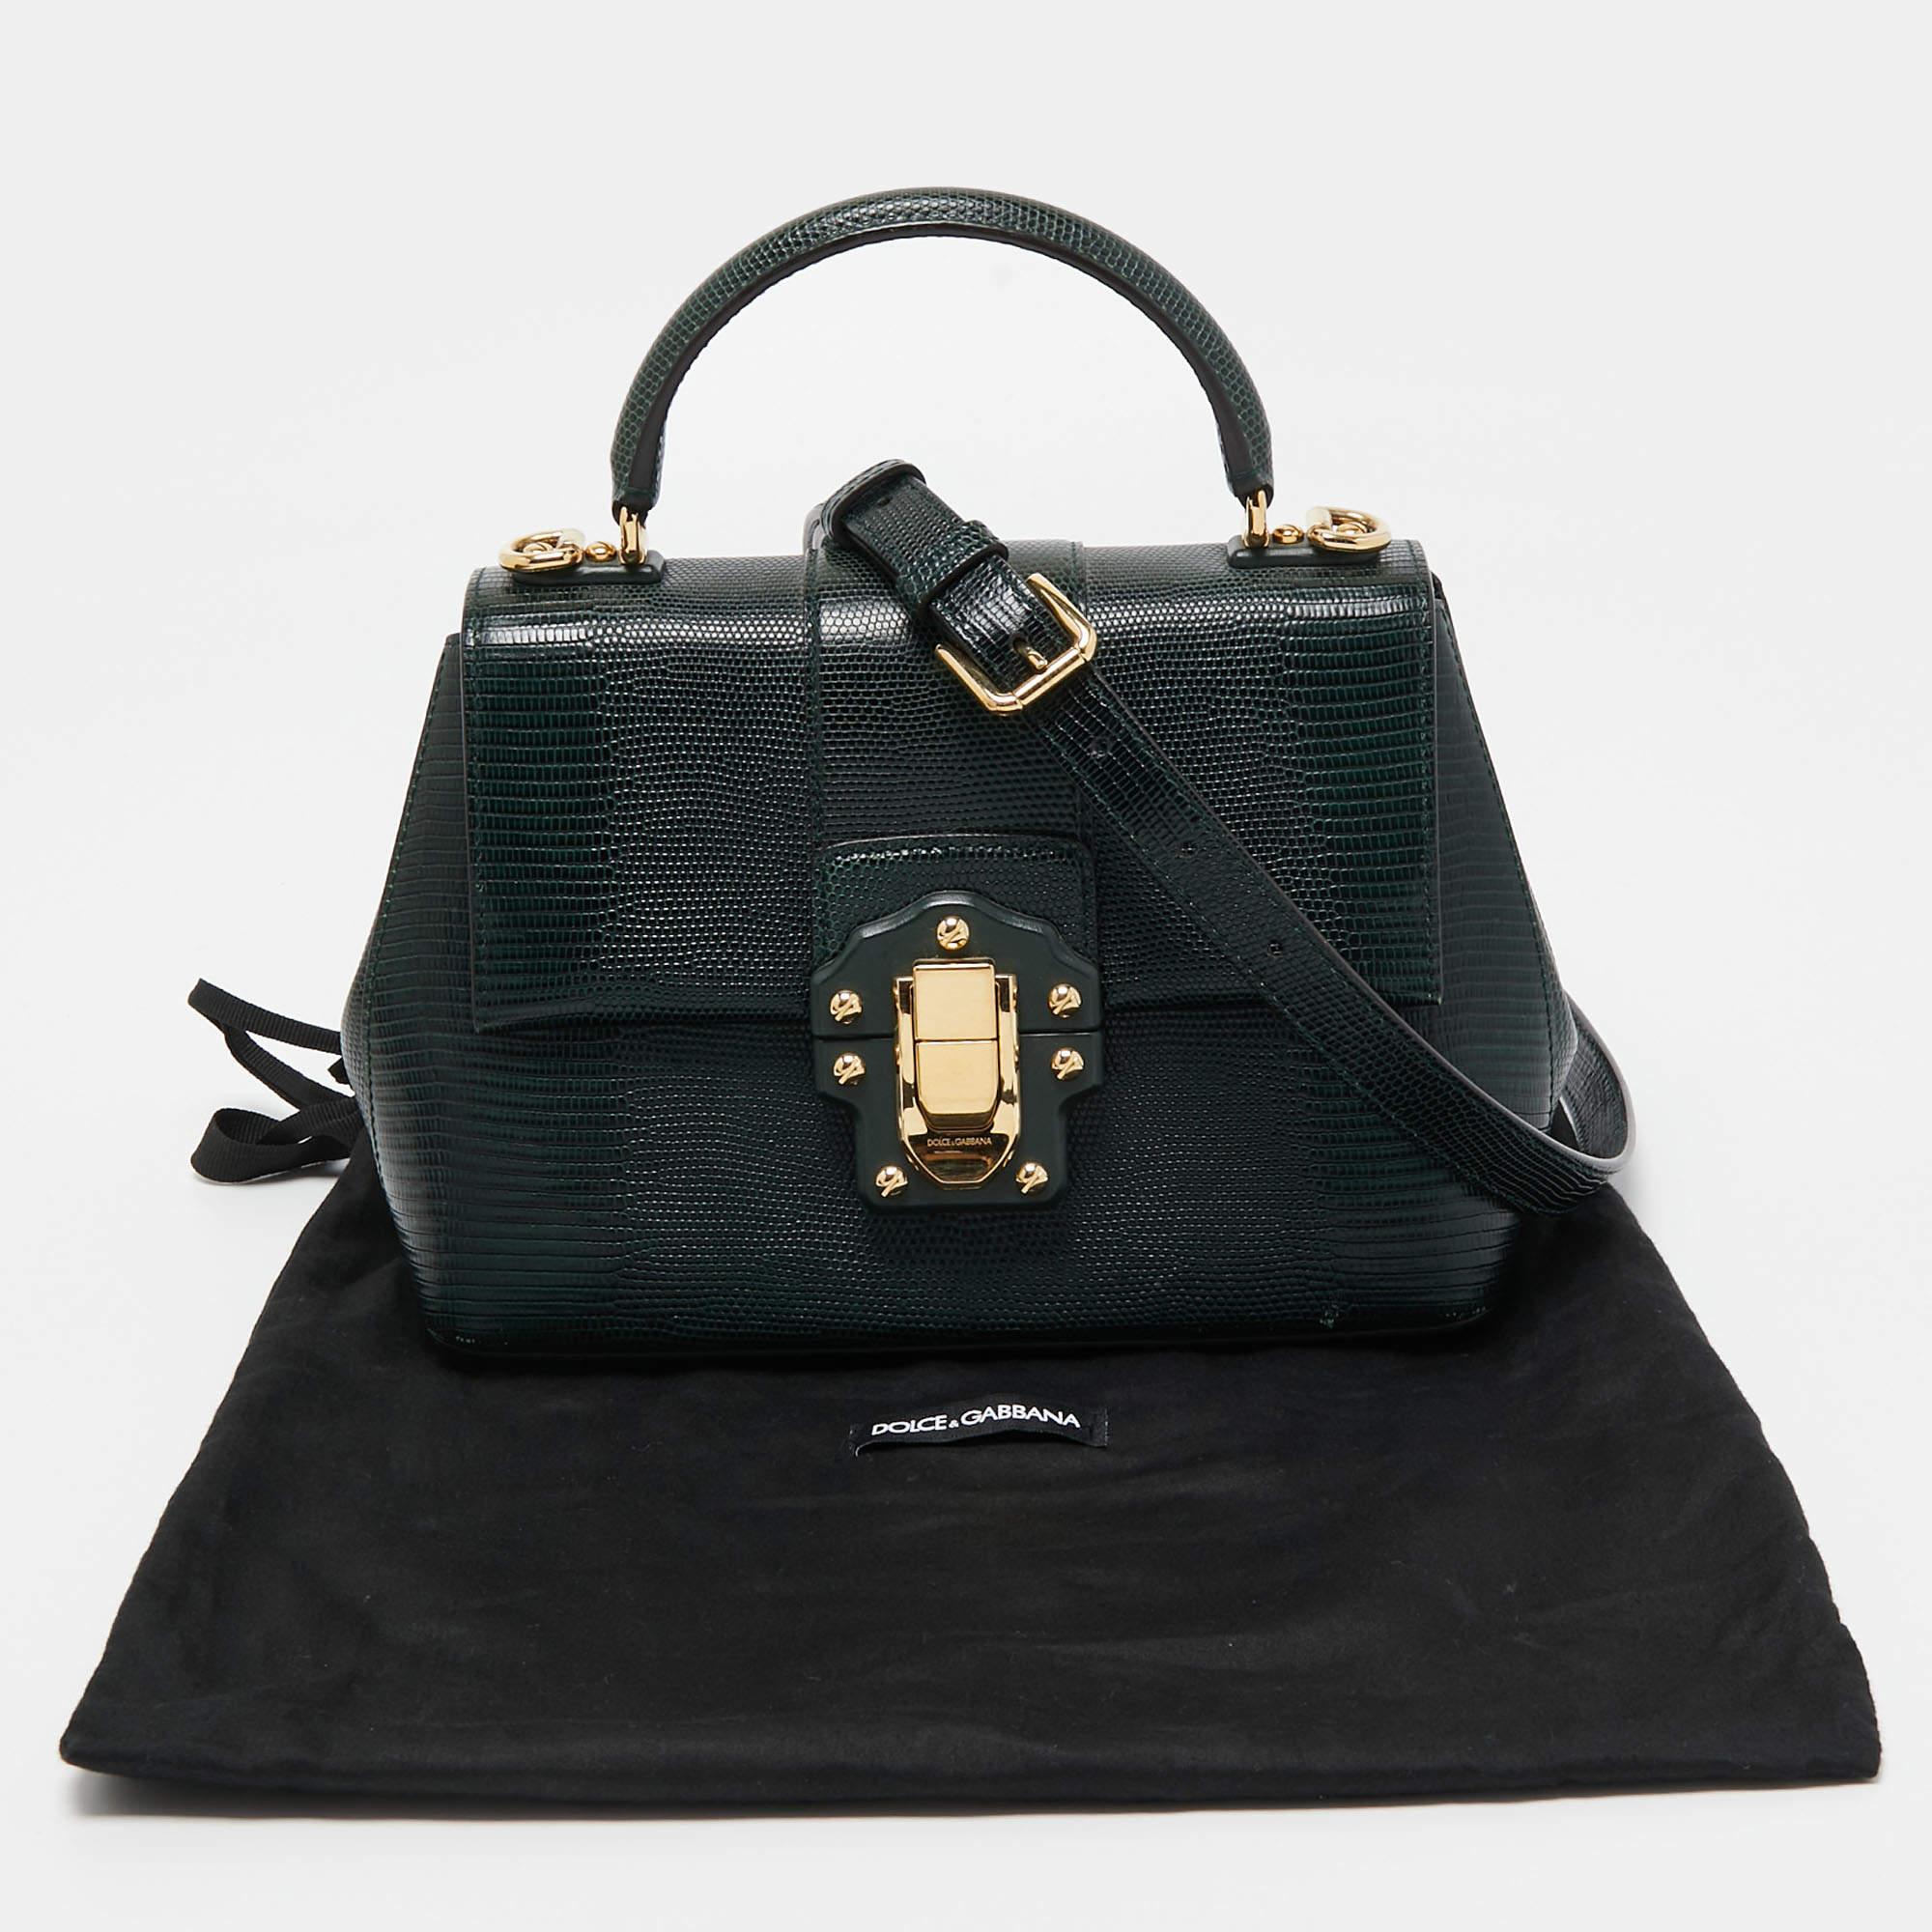 Dolce & Gabbana Dark Green Lizard Embossed Leather Medium Lucia Top Handle Bag 6